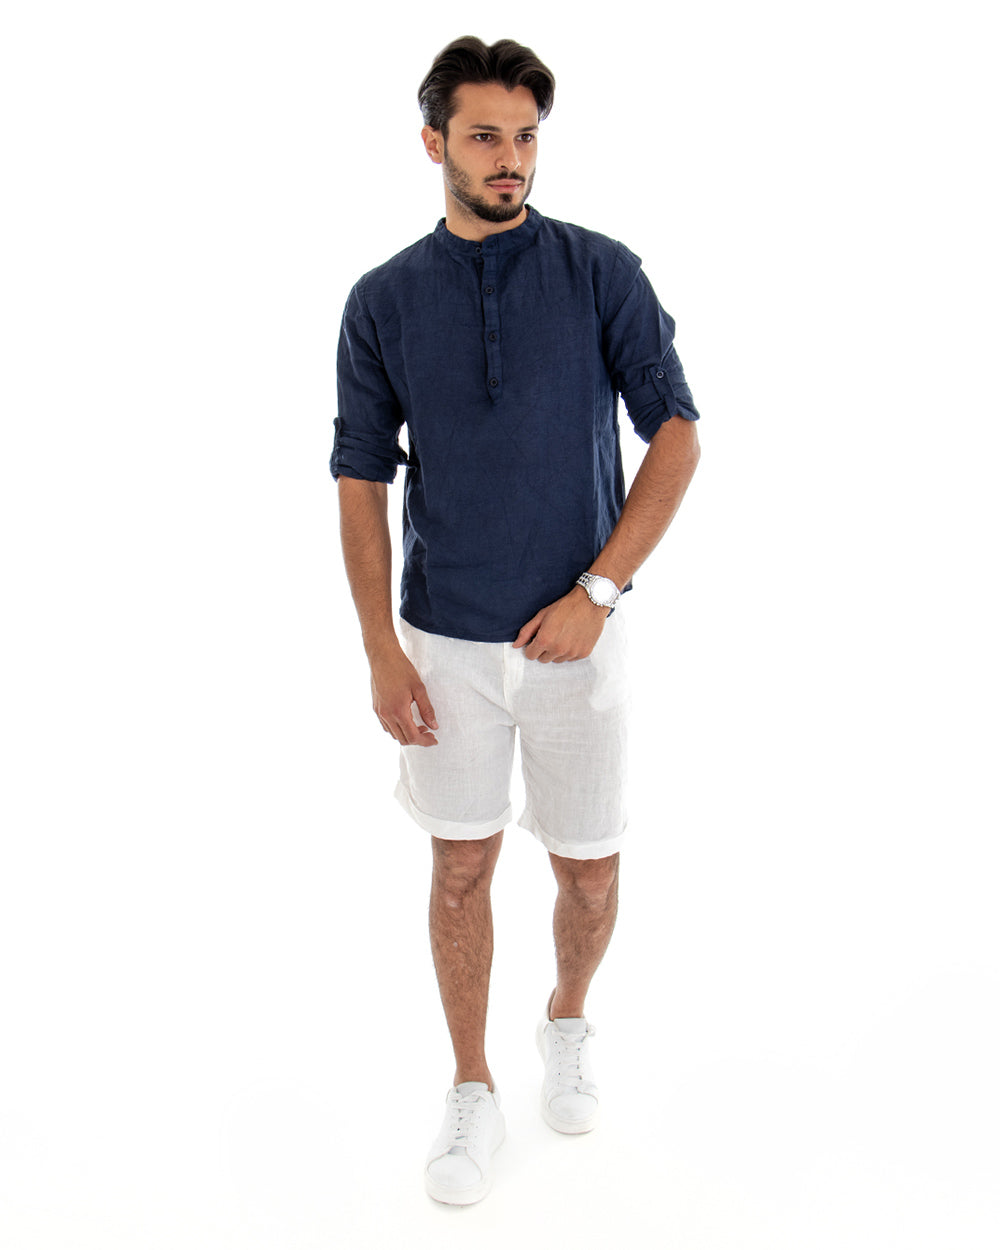 Bermuda Shorts Men's Linen Solid Color White America Pocket GIOSAL-PC1647A